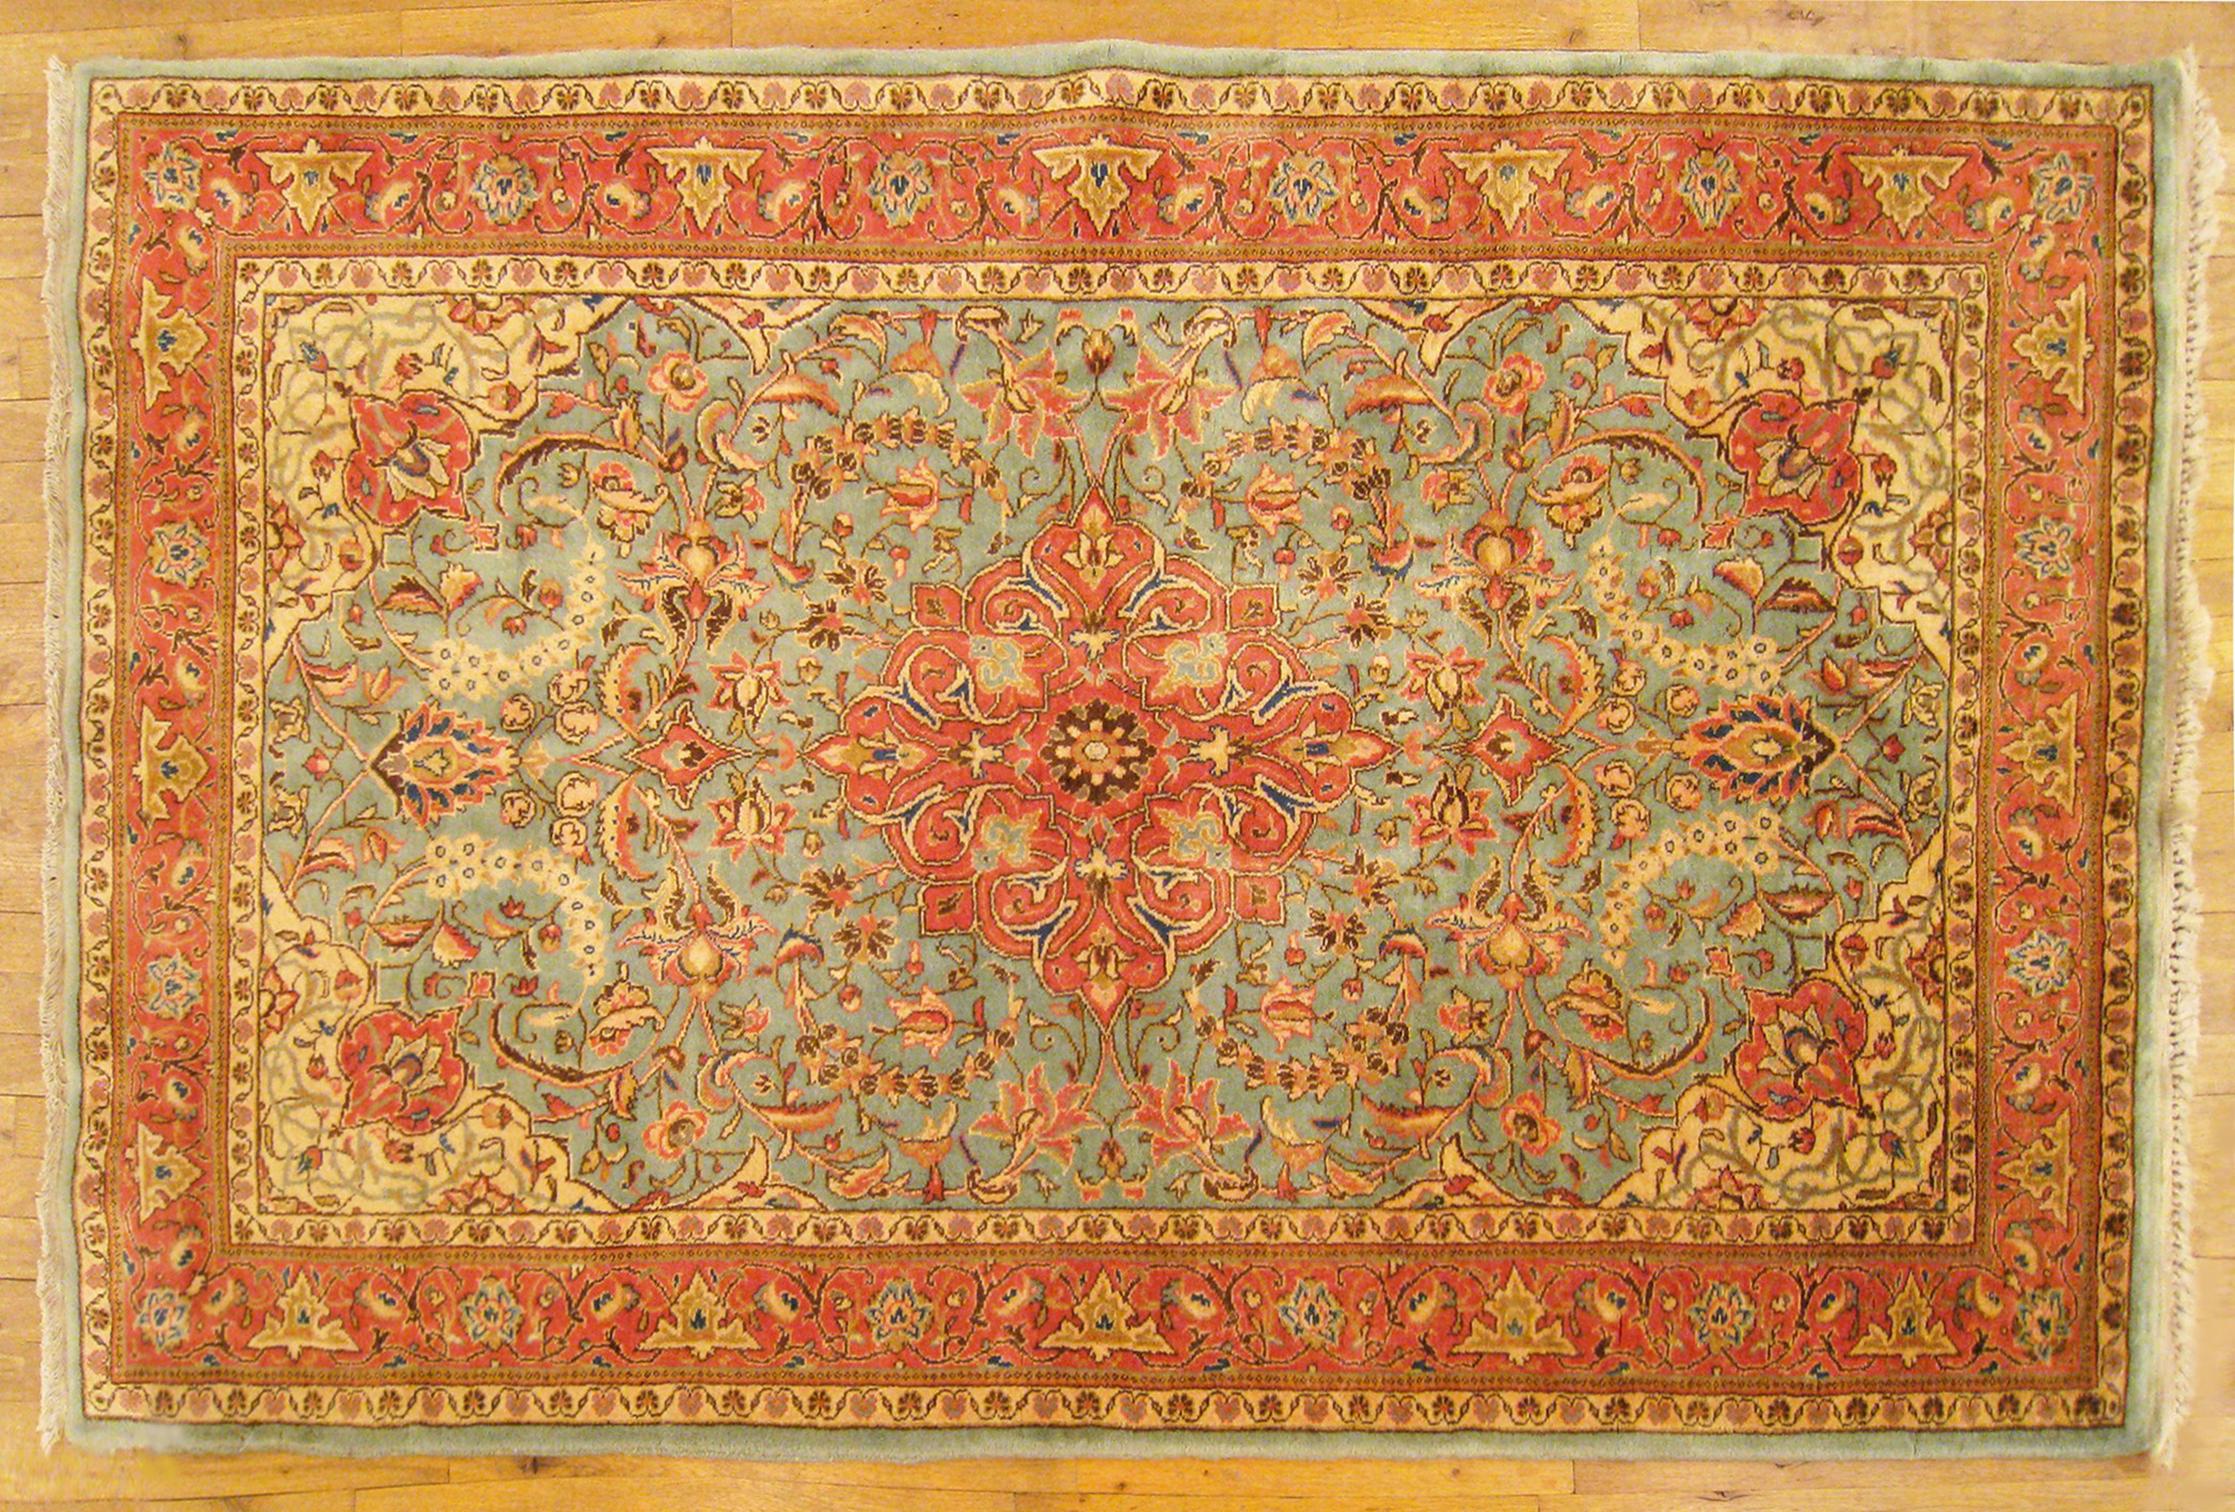 Vintage Persian Sarouk oriental rug, circa 1950, small size.

A vintage Persian Sarouk oriental rug, size 7'2